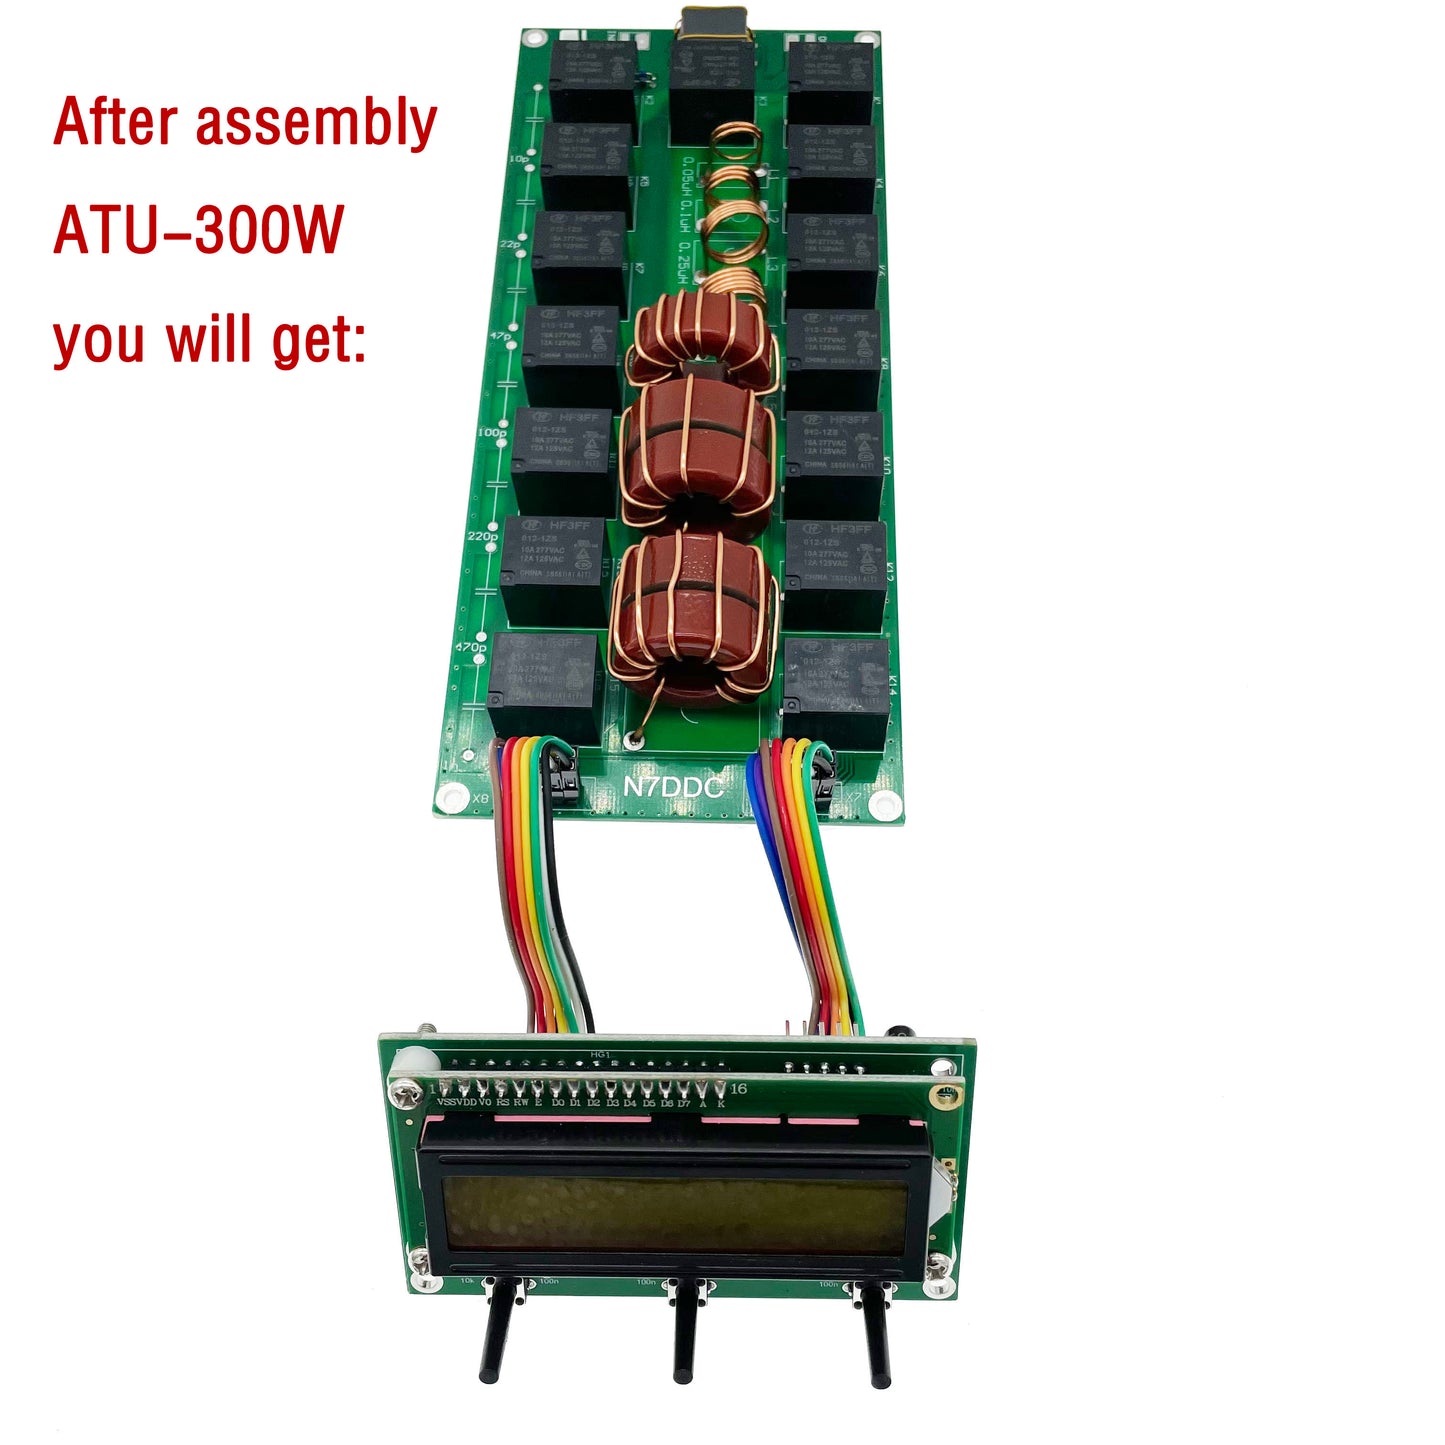 ATU-100 atu100 Machine and Kits 1.8-50MHz  ATU100mini Automatic Antenna Tuner by N7DDC 7x7 3.2Firmware Programmed OLED